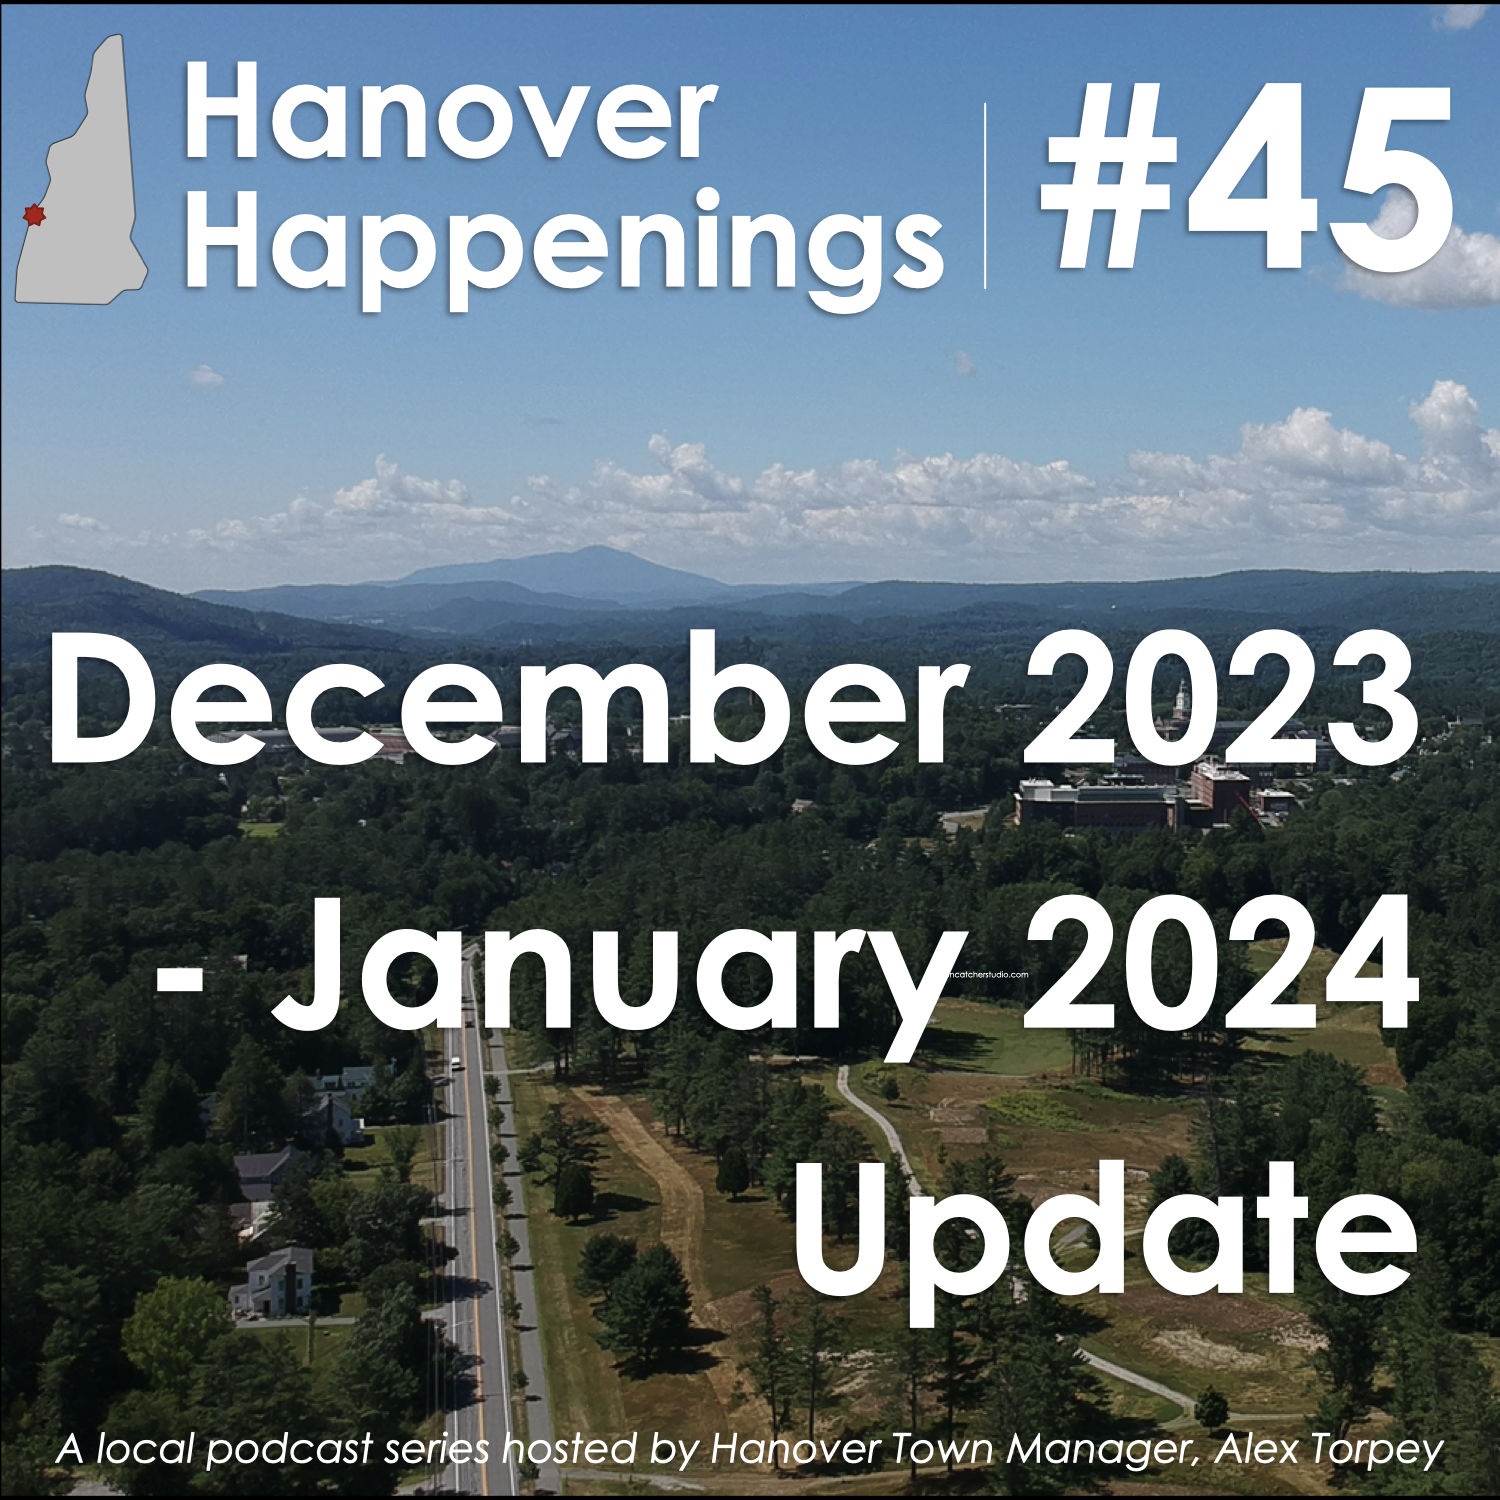 Hanover Happenings December 2023 and January 2024 Update